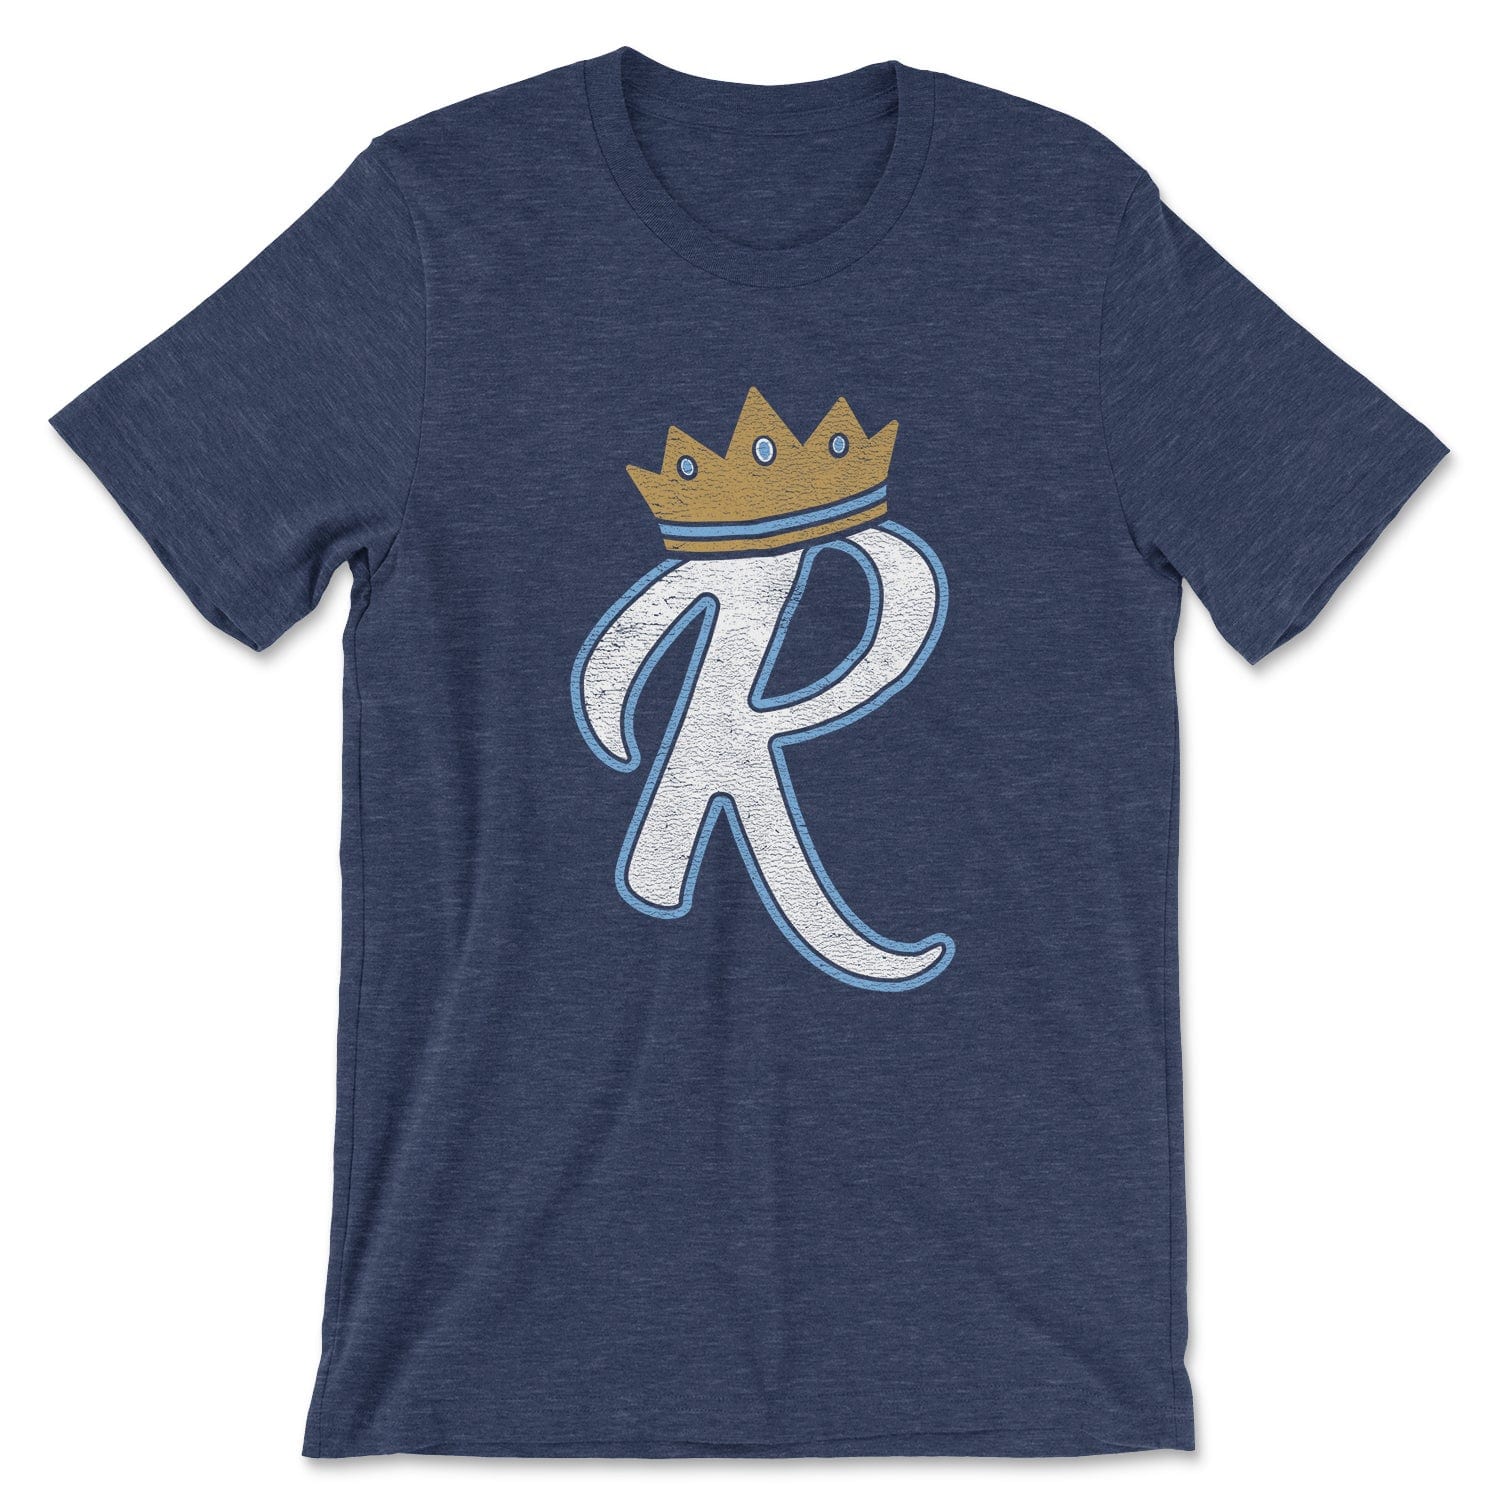 Royals T Shirt by Radu Negara